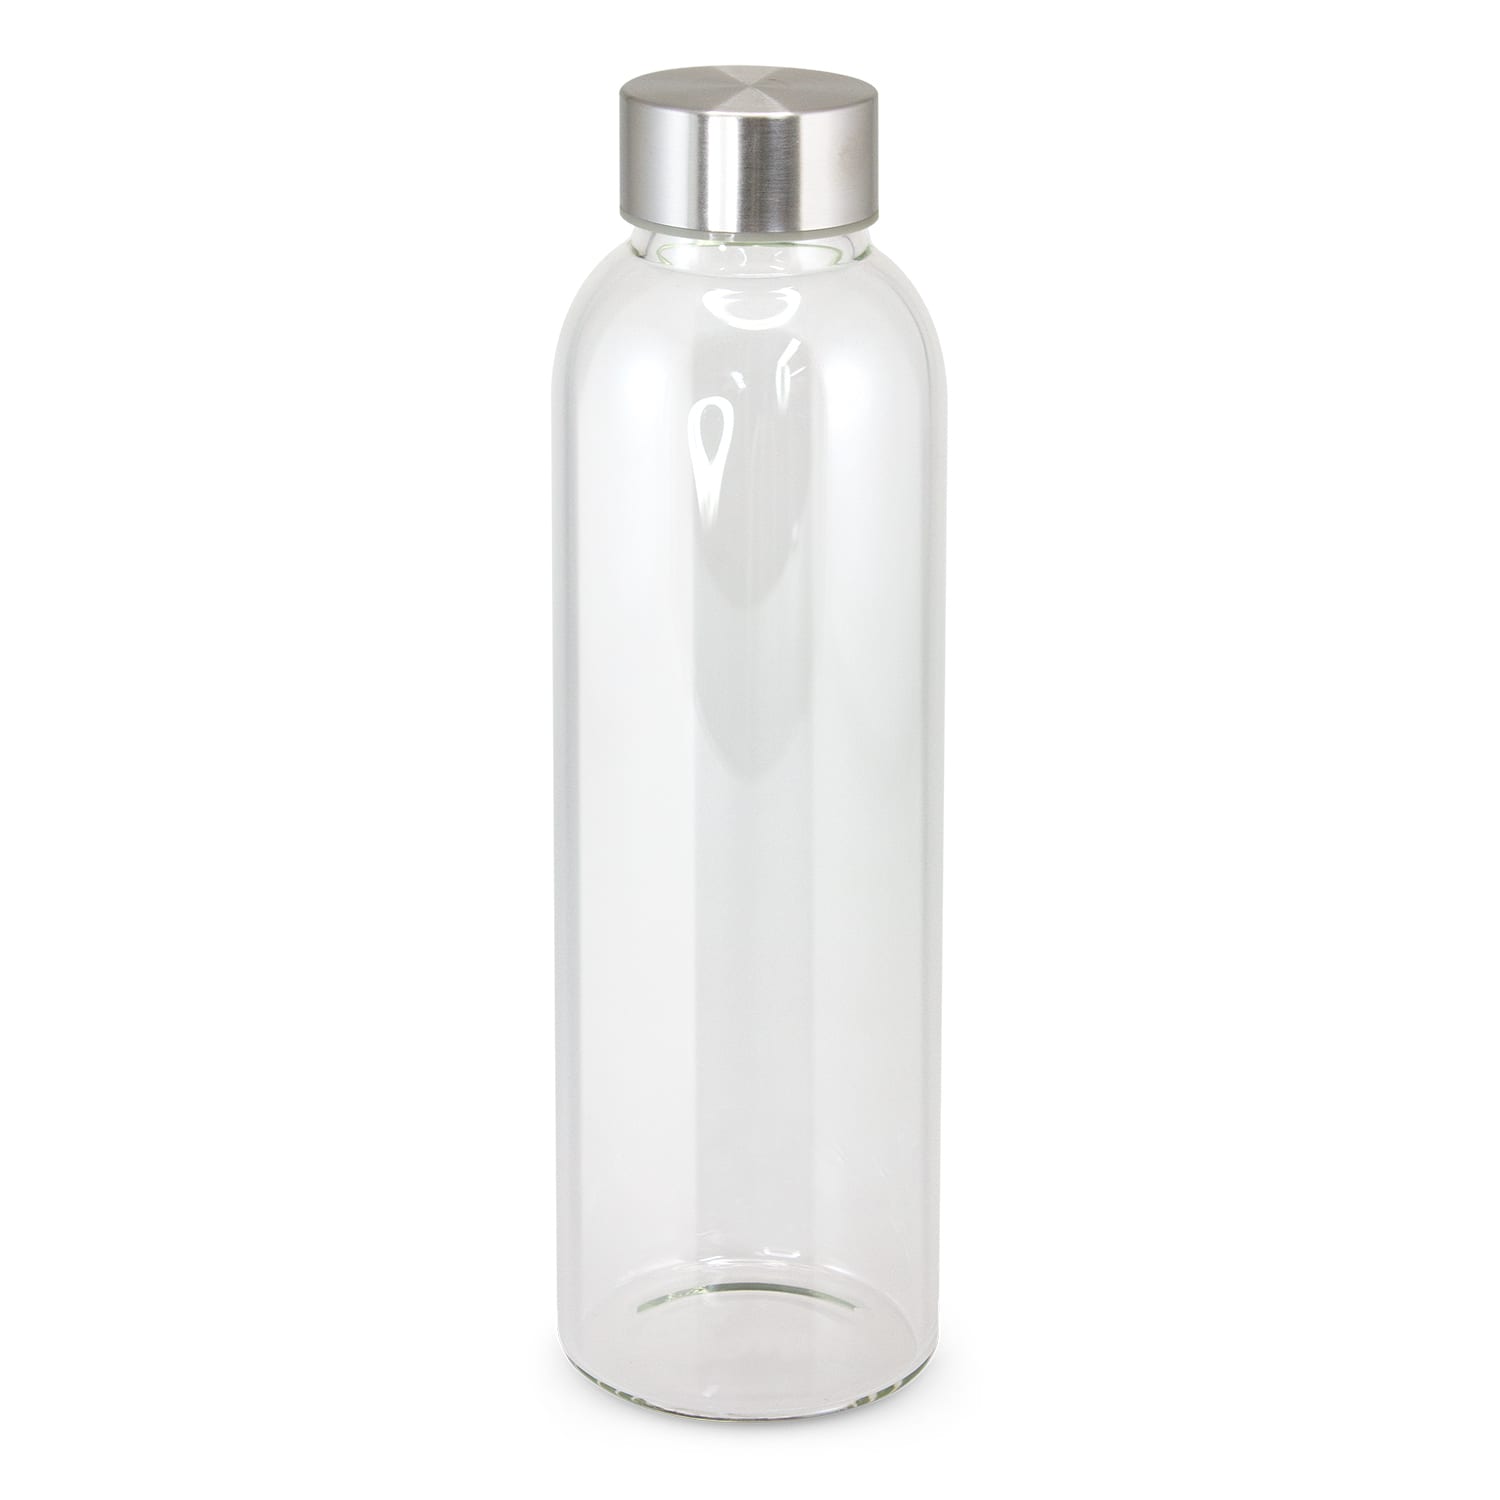 Eco Venus Glass Bottle bottle